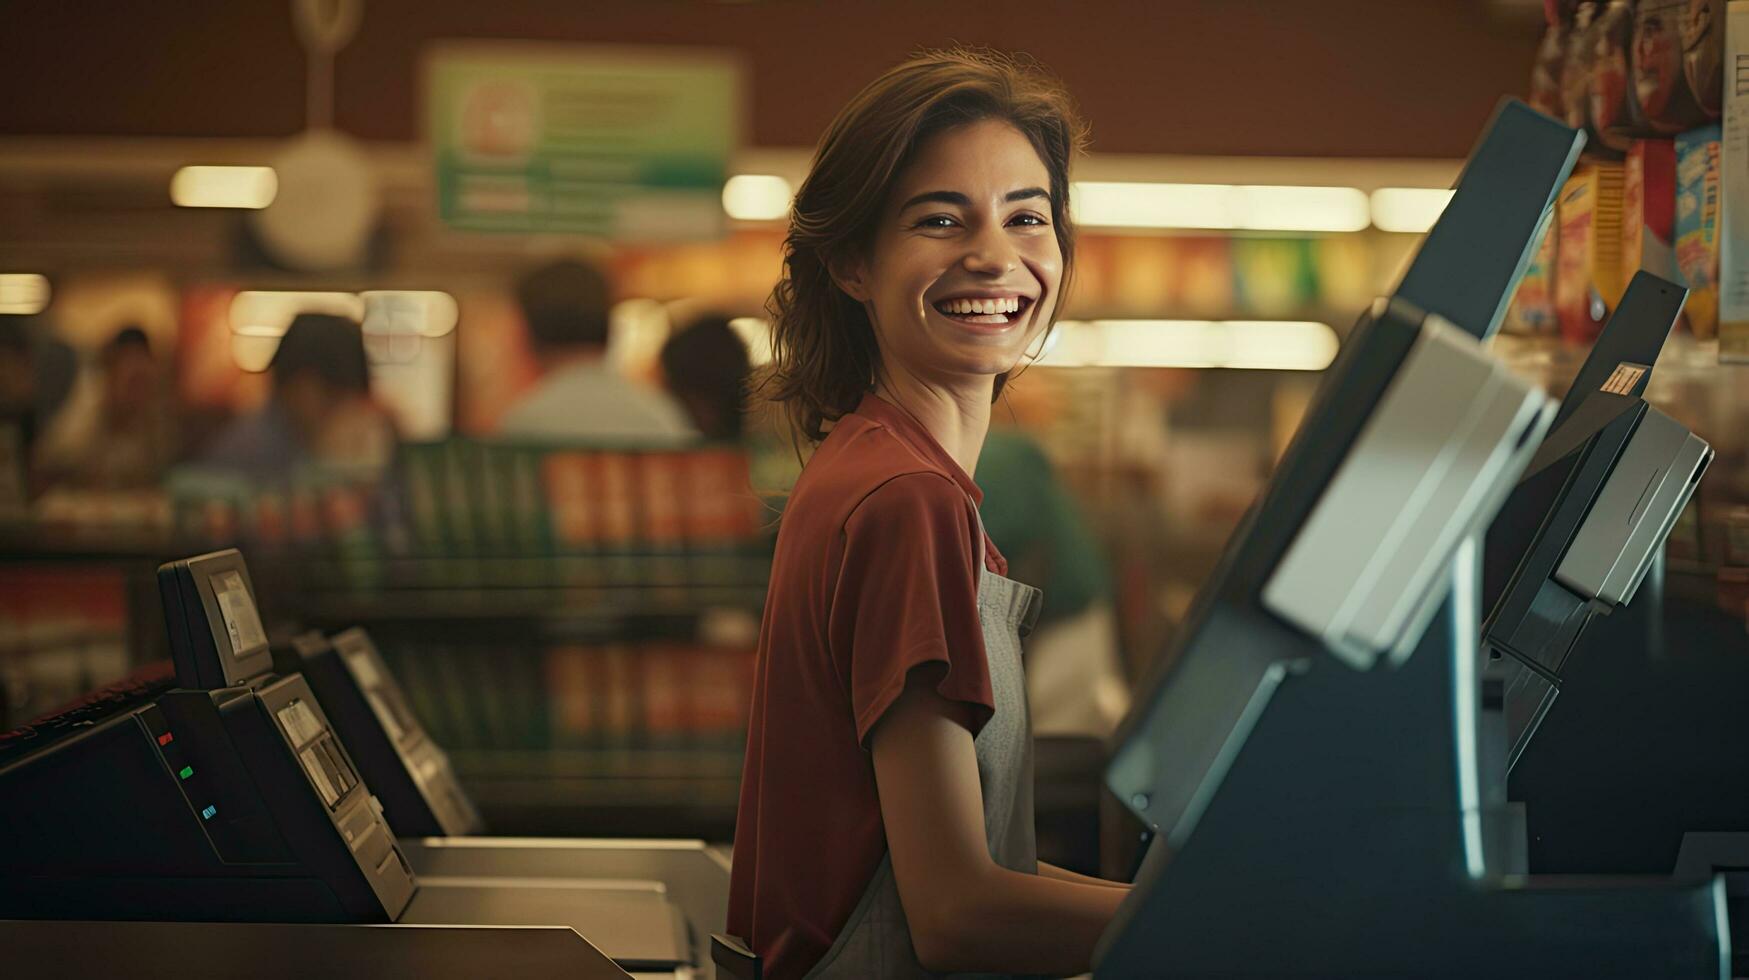 mooi glimlachen Kassa werken Bij kruidenier winkel, kassa foto